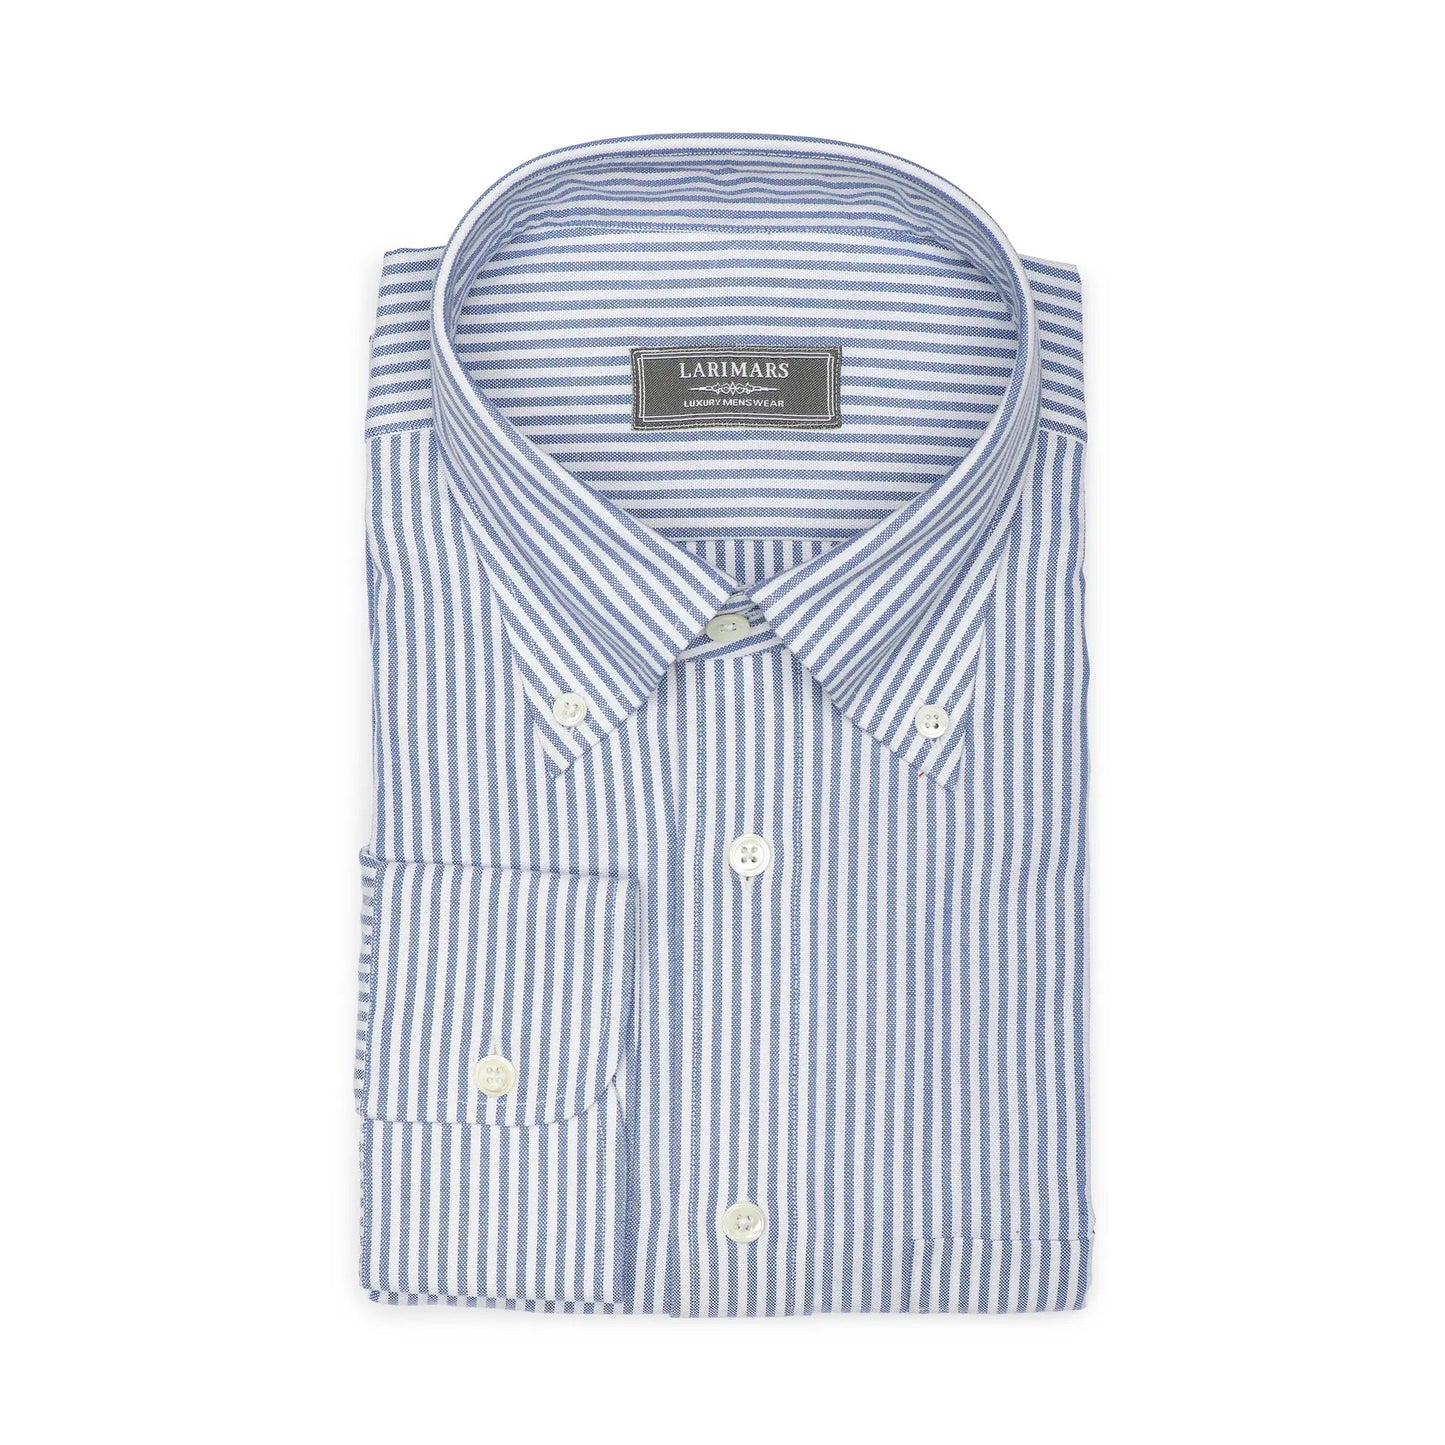 Medium Blue Stripe Oxford - Larimars Clothing Men's Formal and casual wear shirts